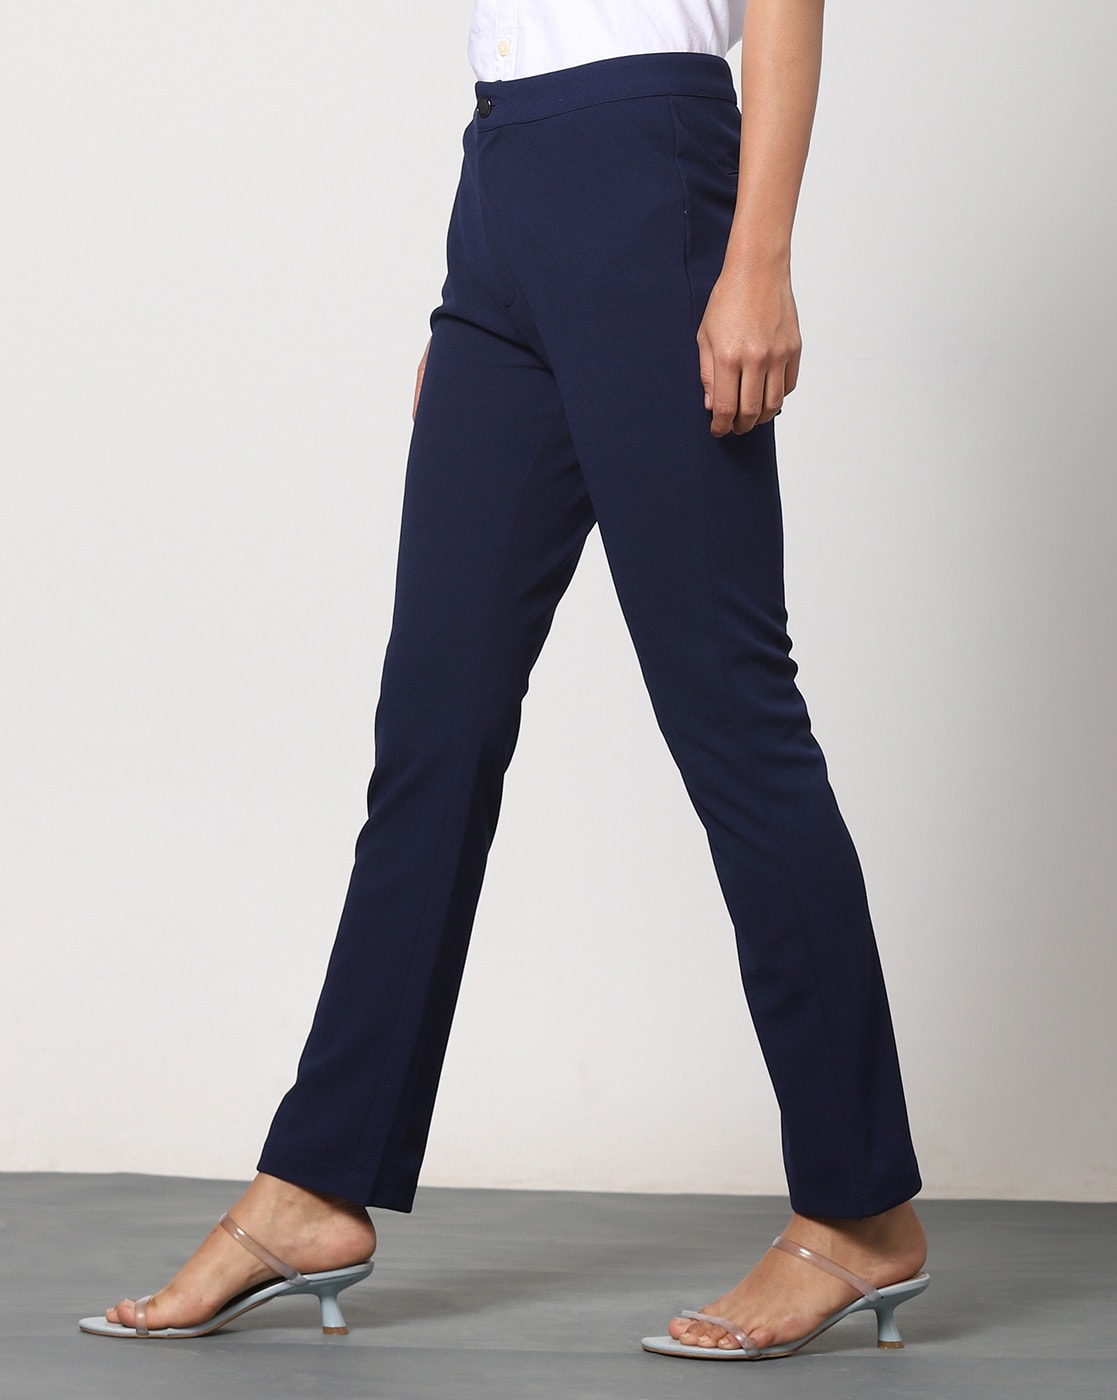 Stylish Cotton Navy Blue Pant for Women  Girls